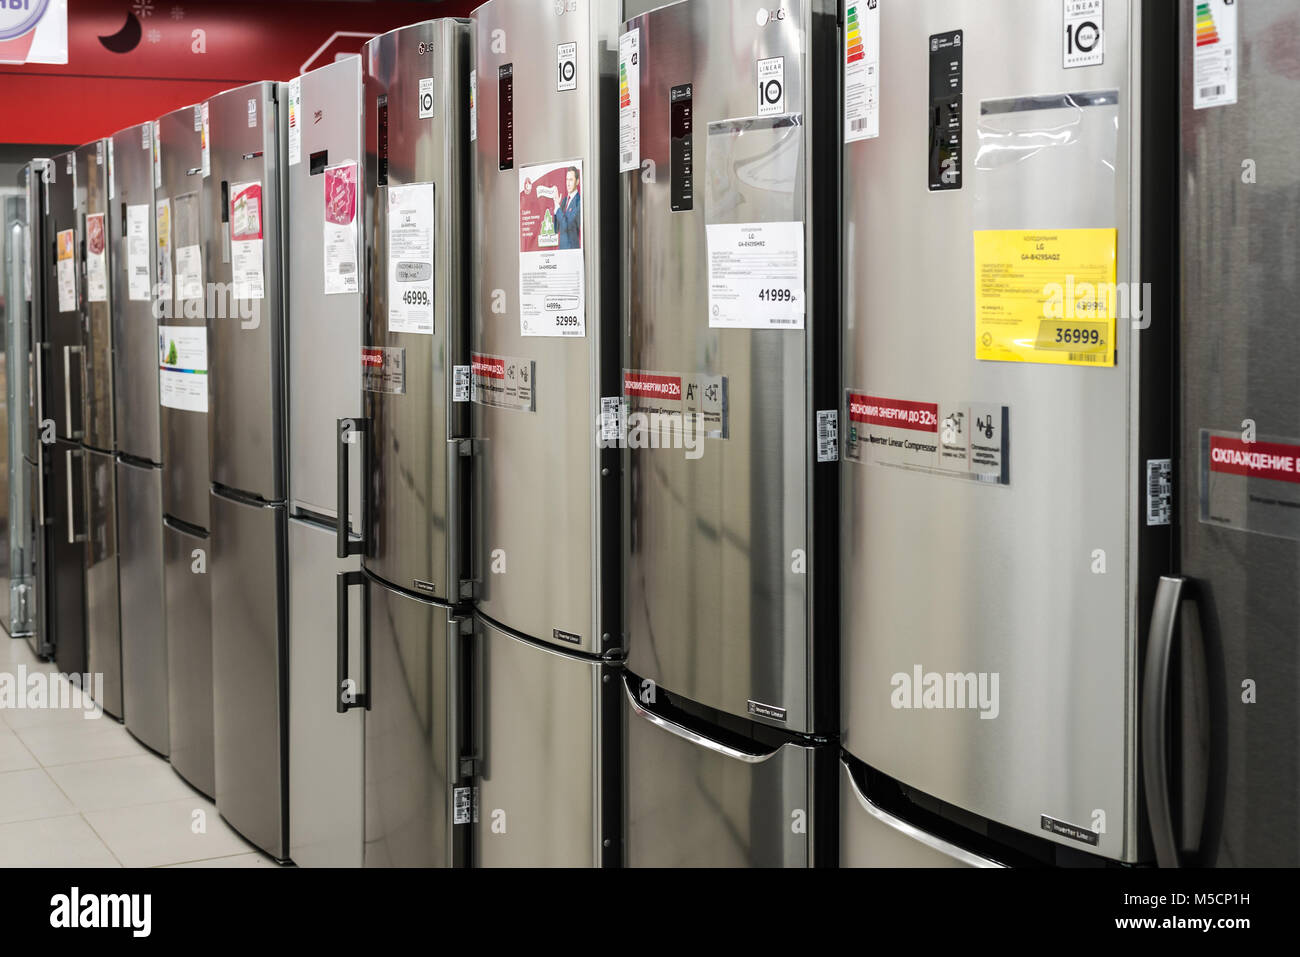 Moscow, Russia - February 20, 2018. Gray refrigerators in electronics store Eldorado Stock Photo